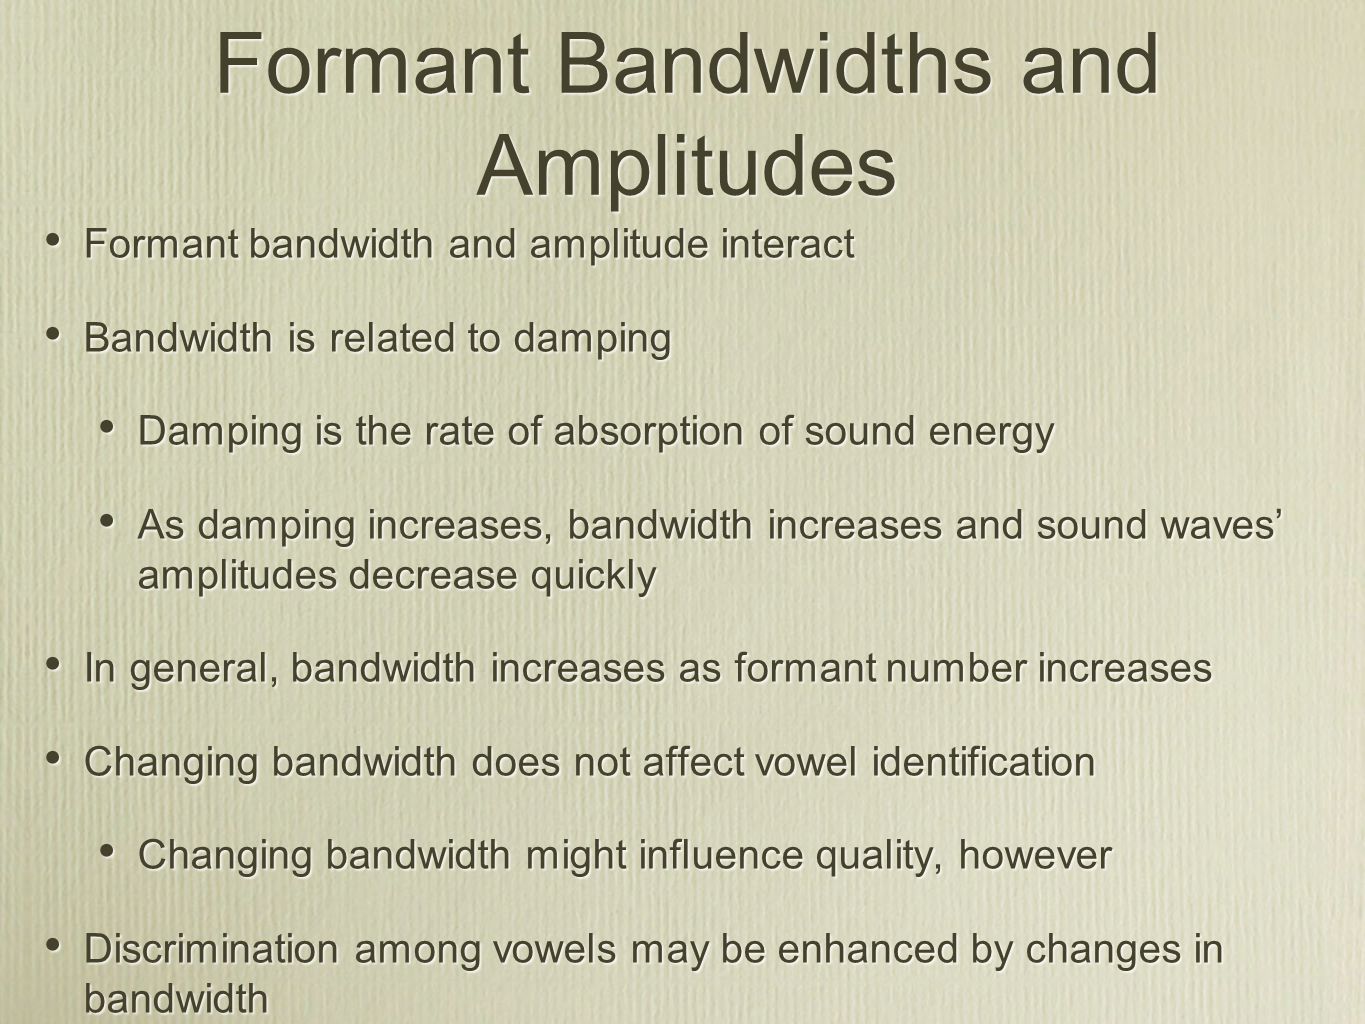 Formant Bandwidths and Amplitudes